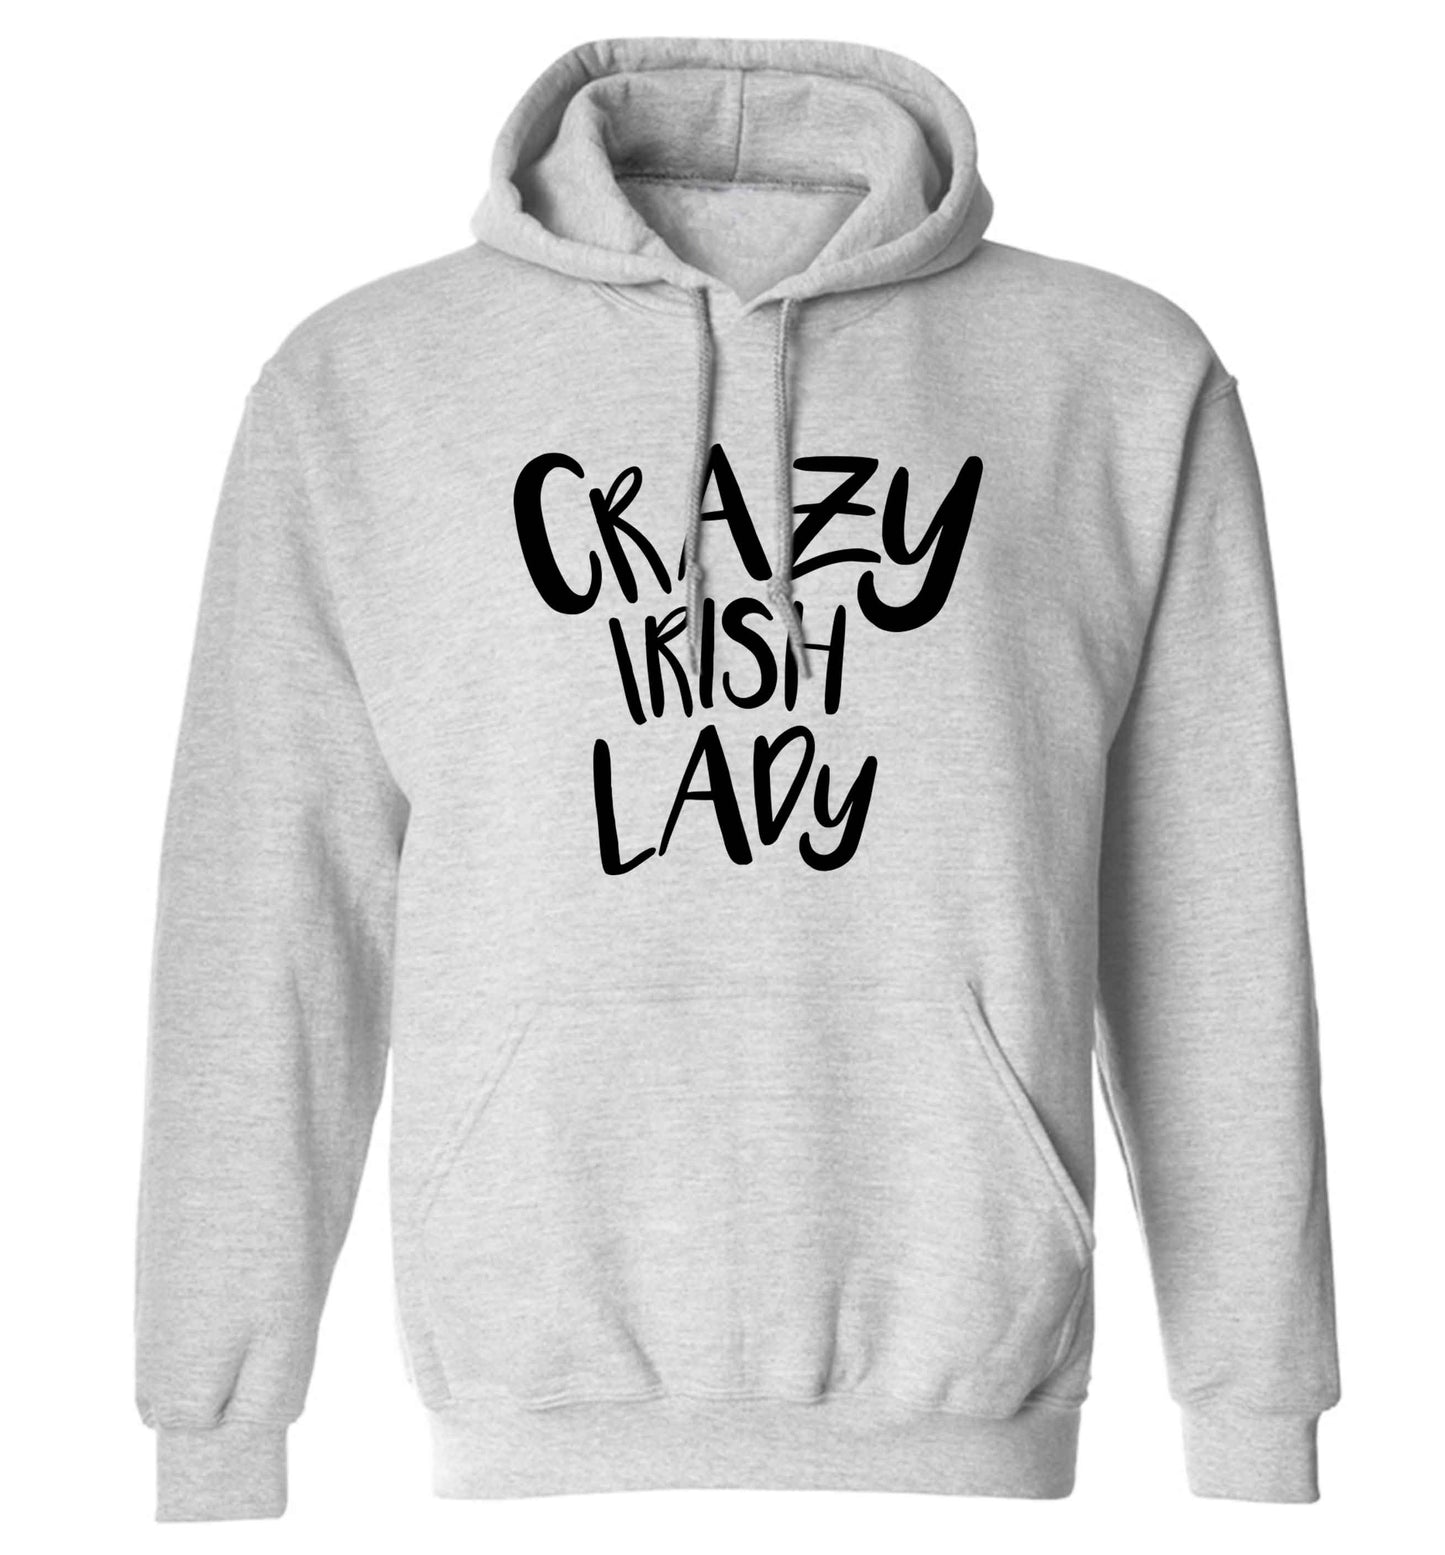 Crazy Irish lady adults unisex grey hoodie 2XL